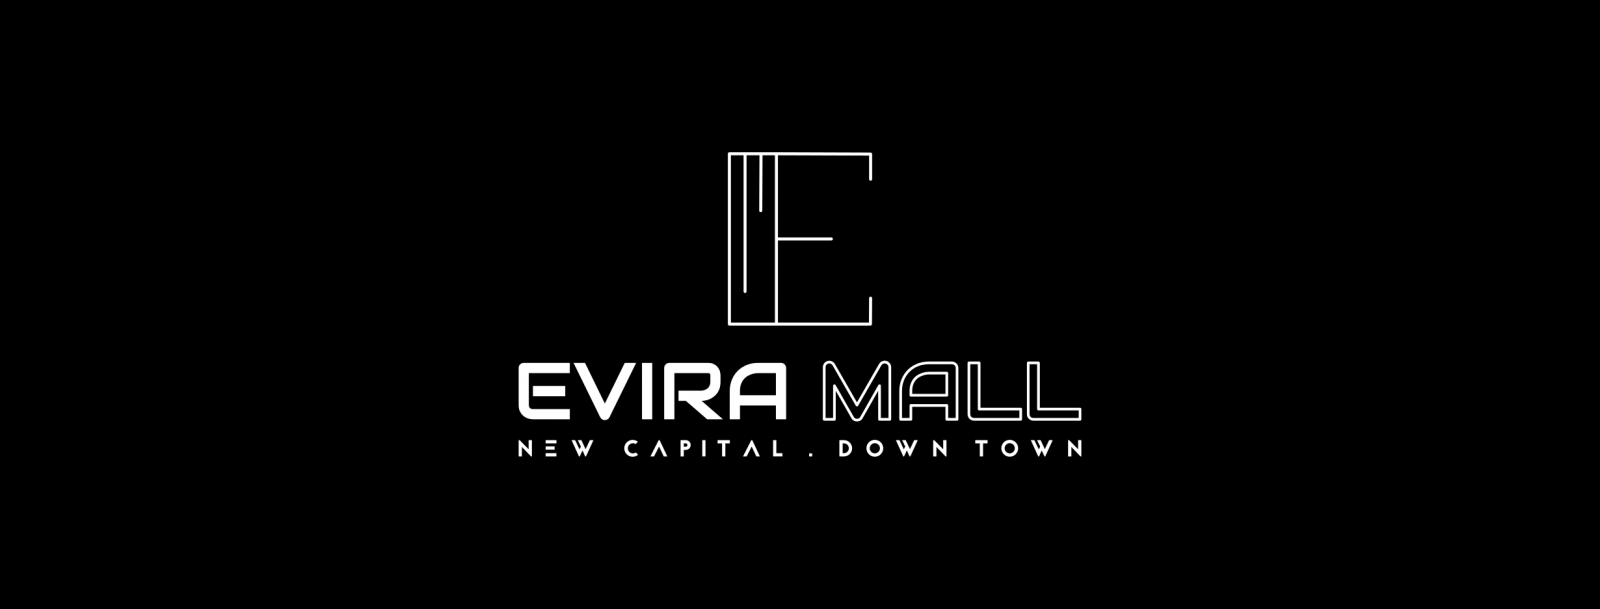 Evira New Capital Mall Four Season Group